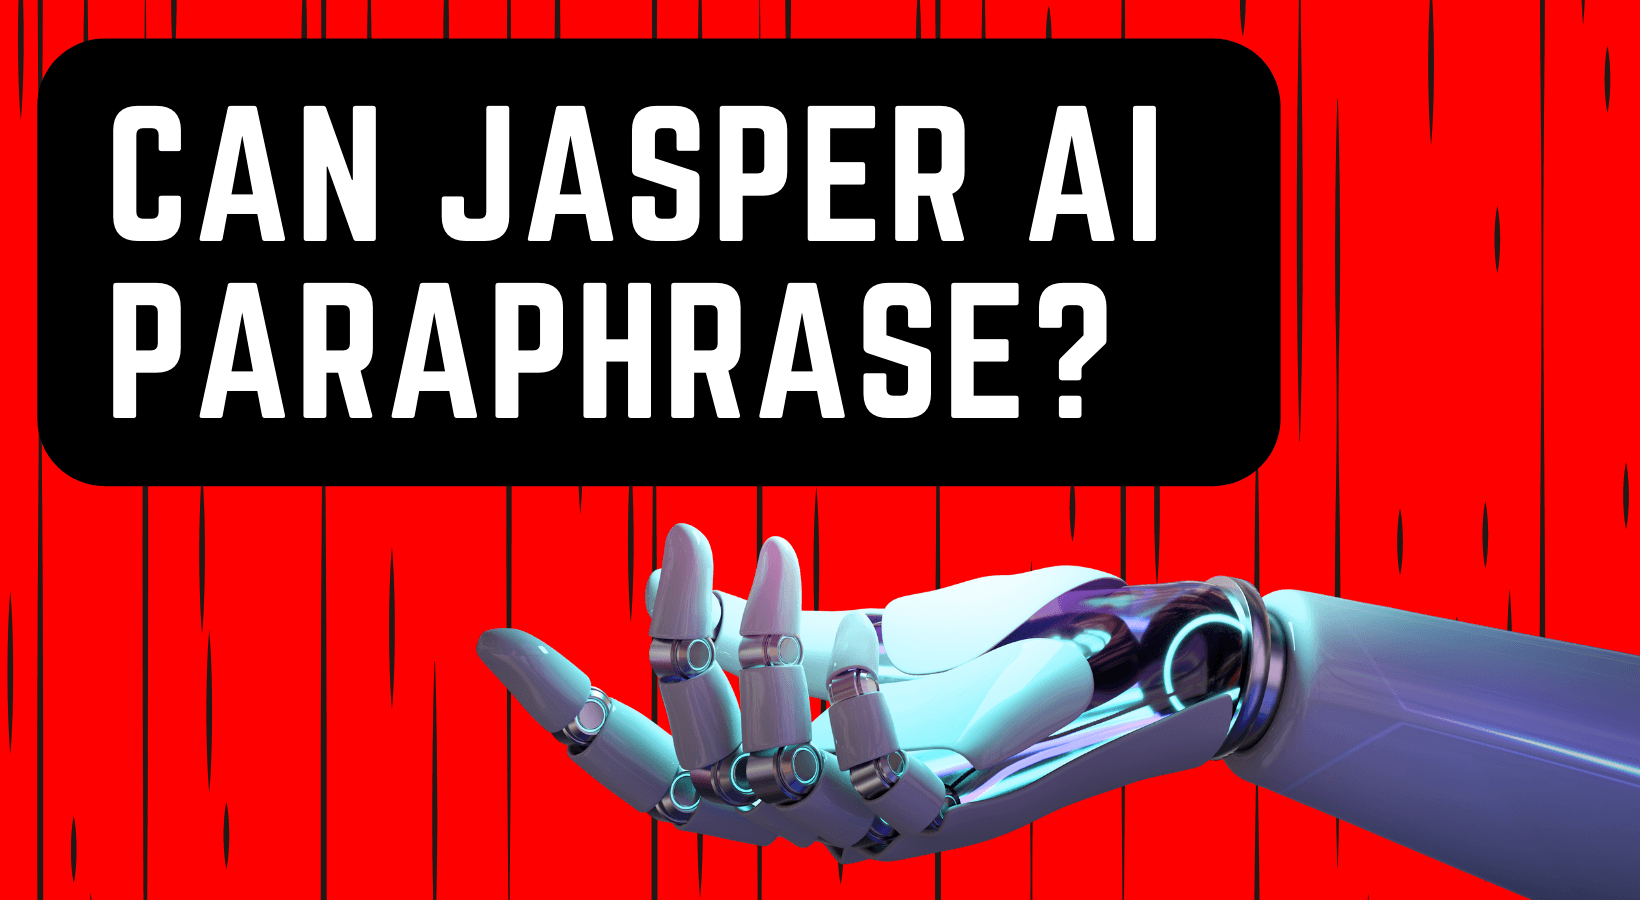 Can Jasper AI Paraphrase Text Content?